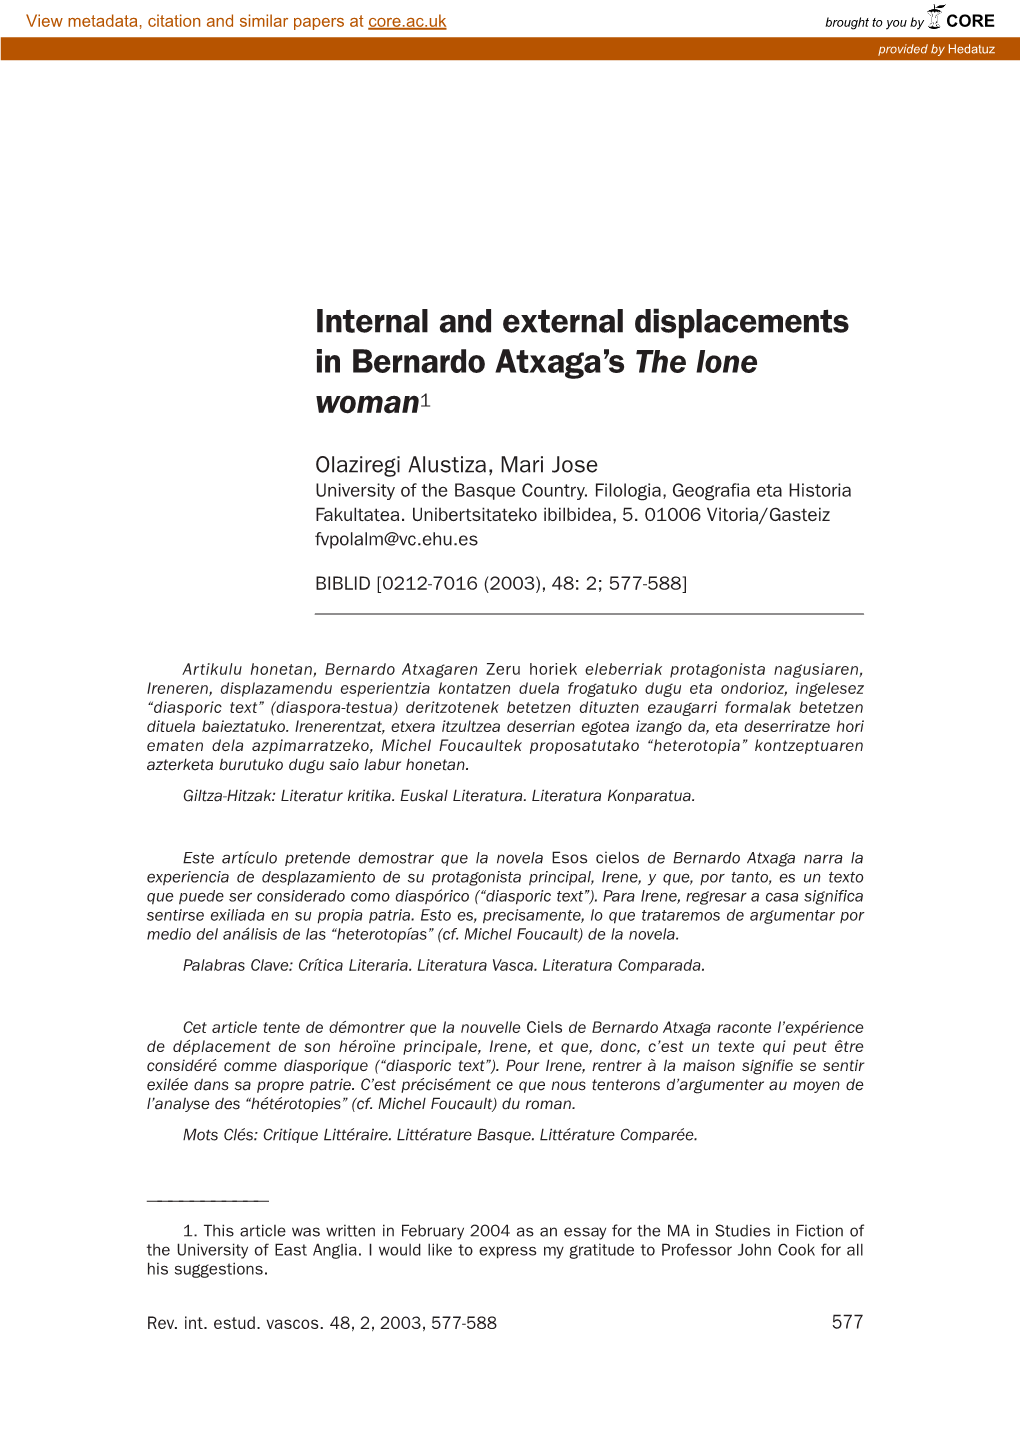 Internal and External Displacements in Bernardo Atxagaￂﾒs &lt;I